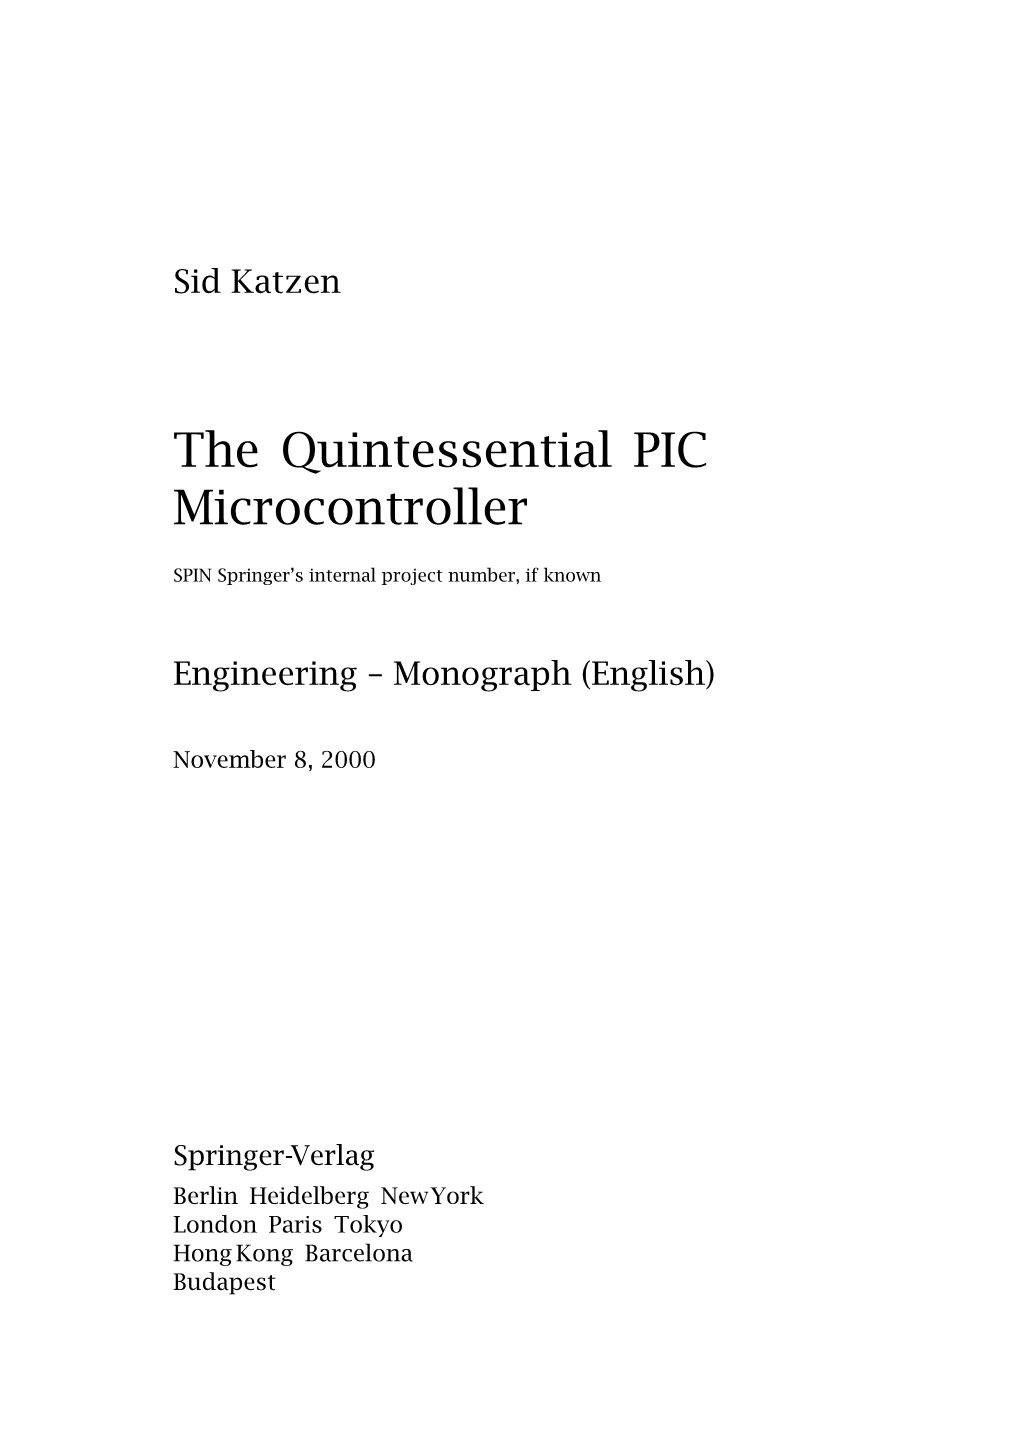 The Quintessential PIC Microcontroller (S. Katzen, 2000).Pdf